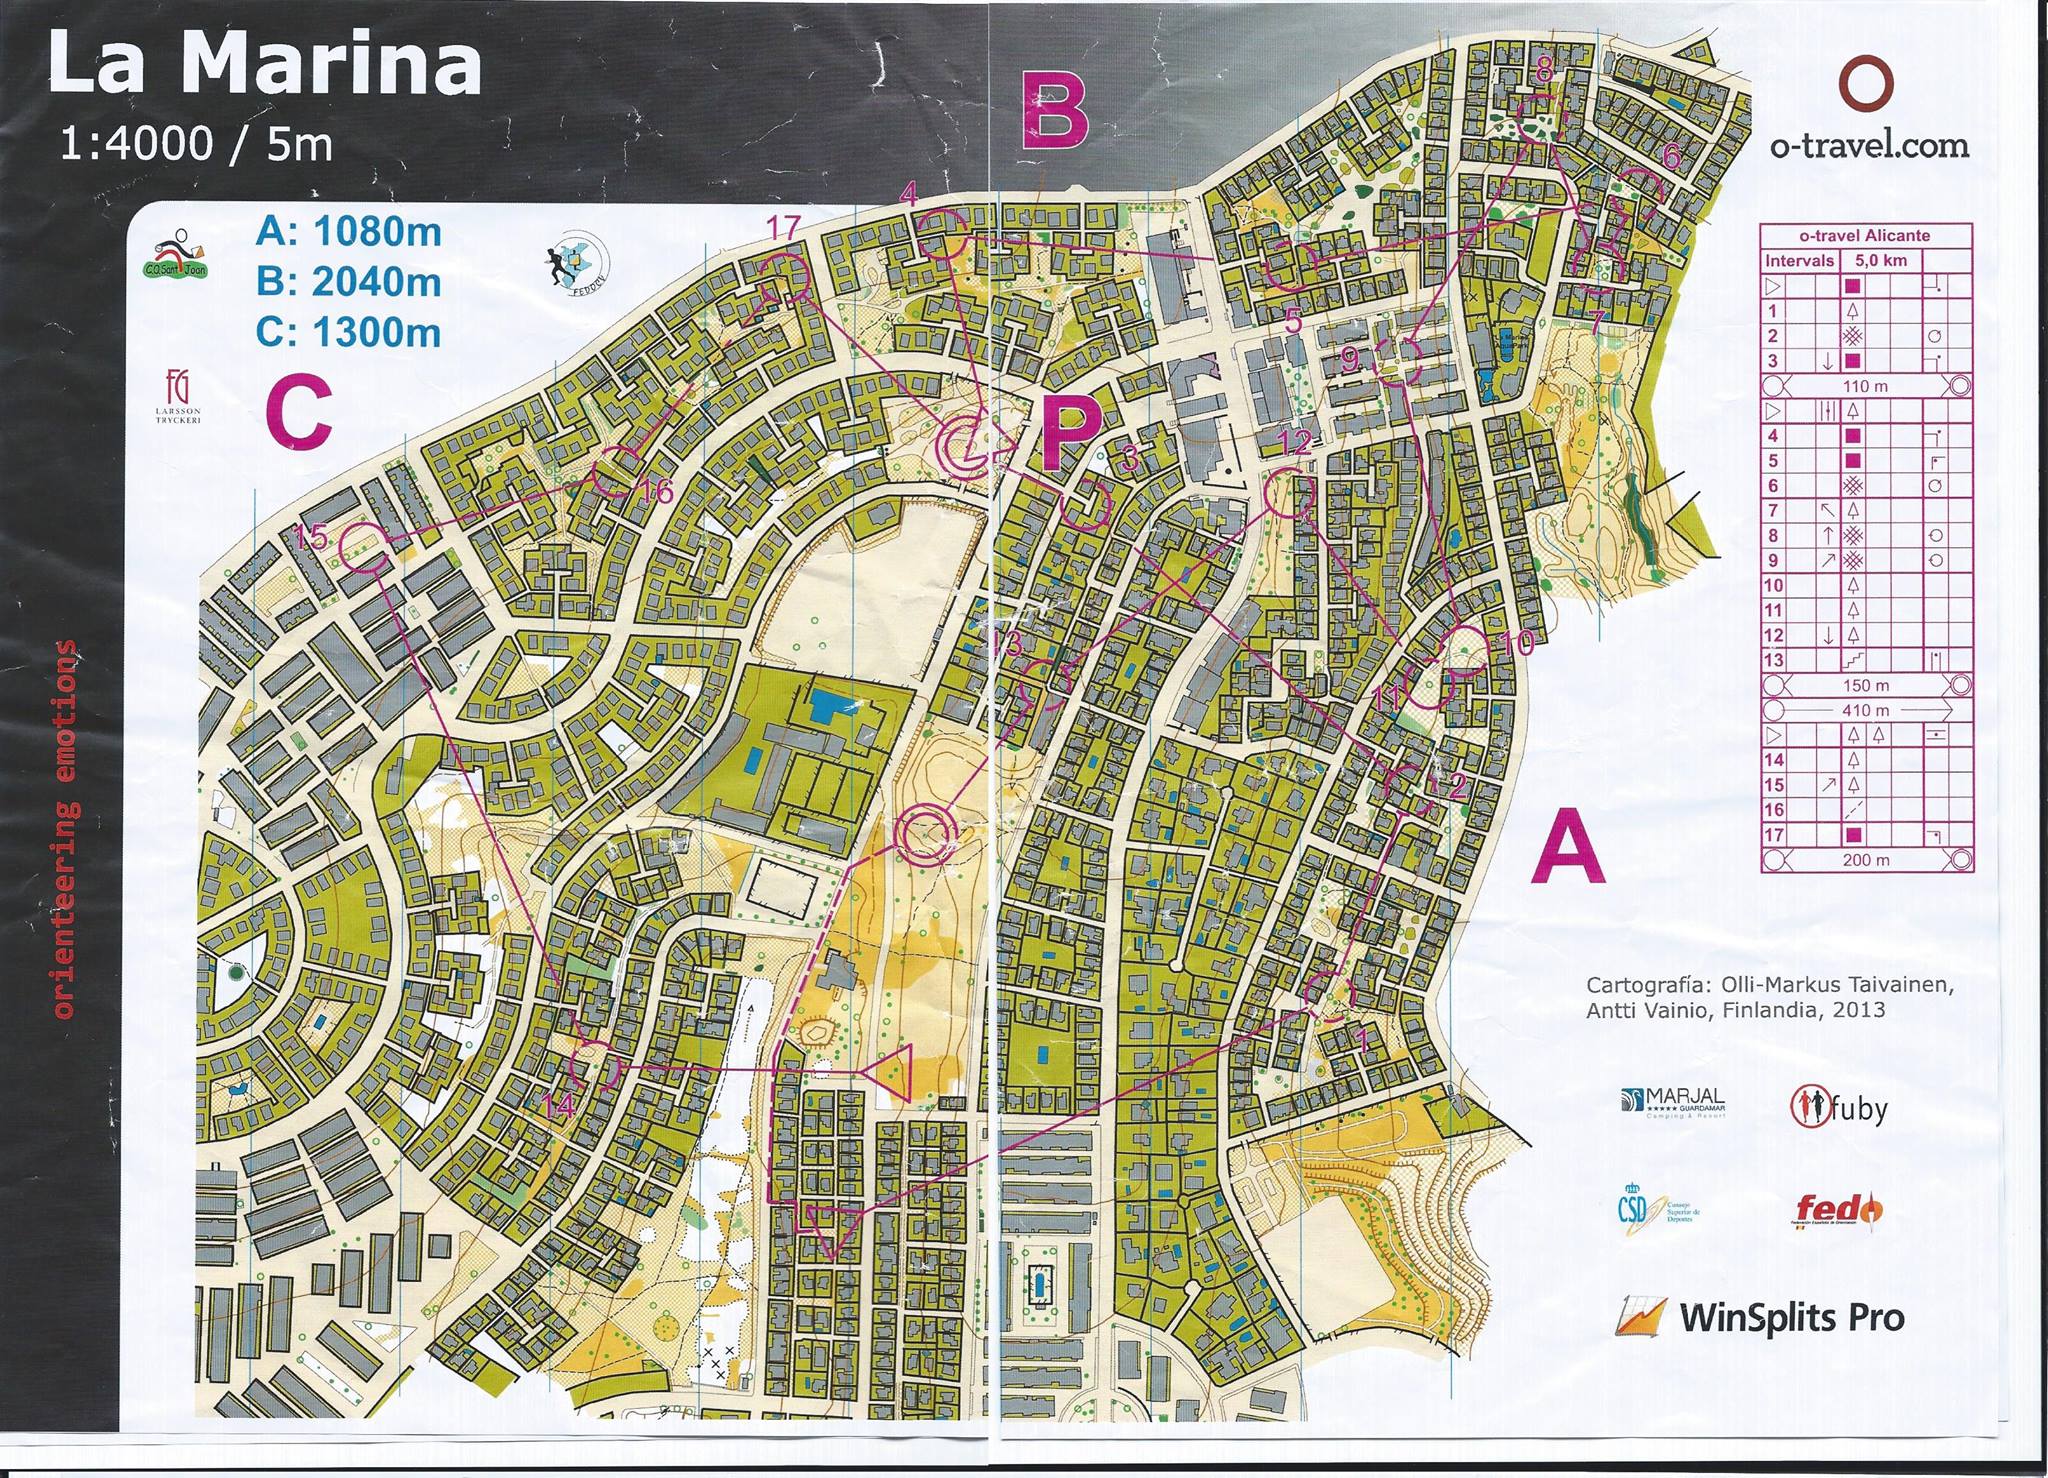 La Marina sprint (2017-02-21)